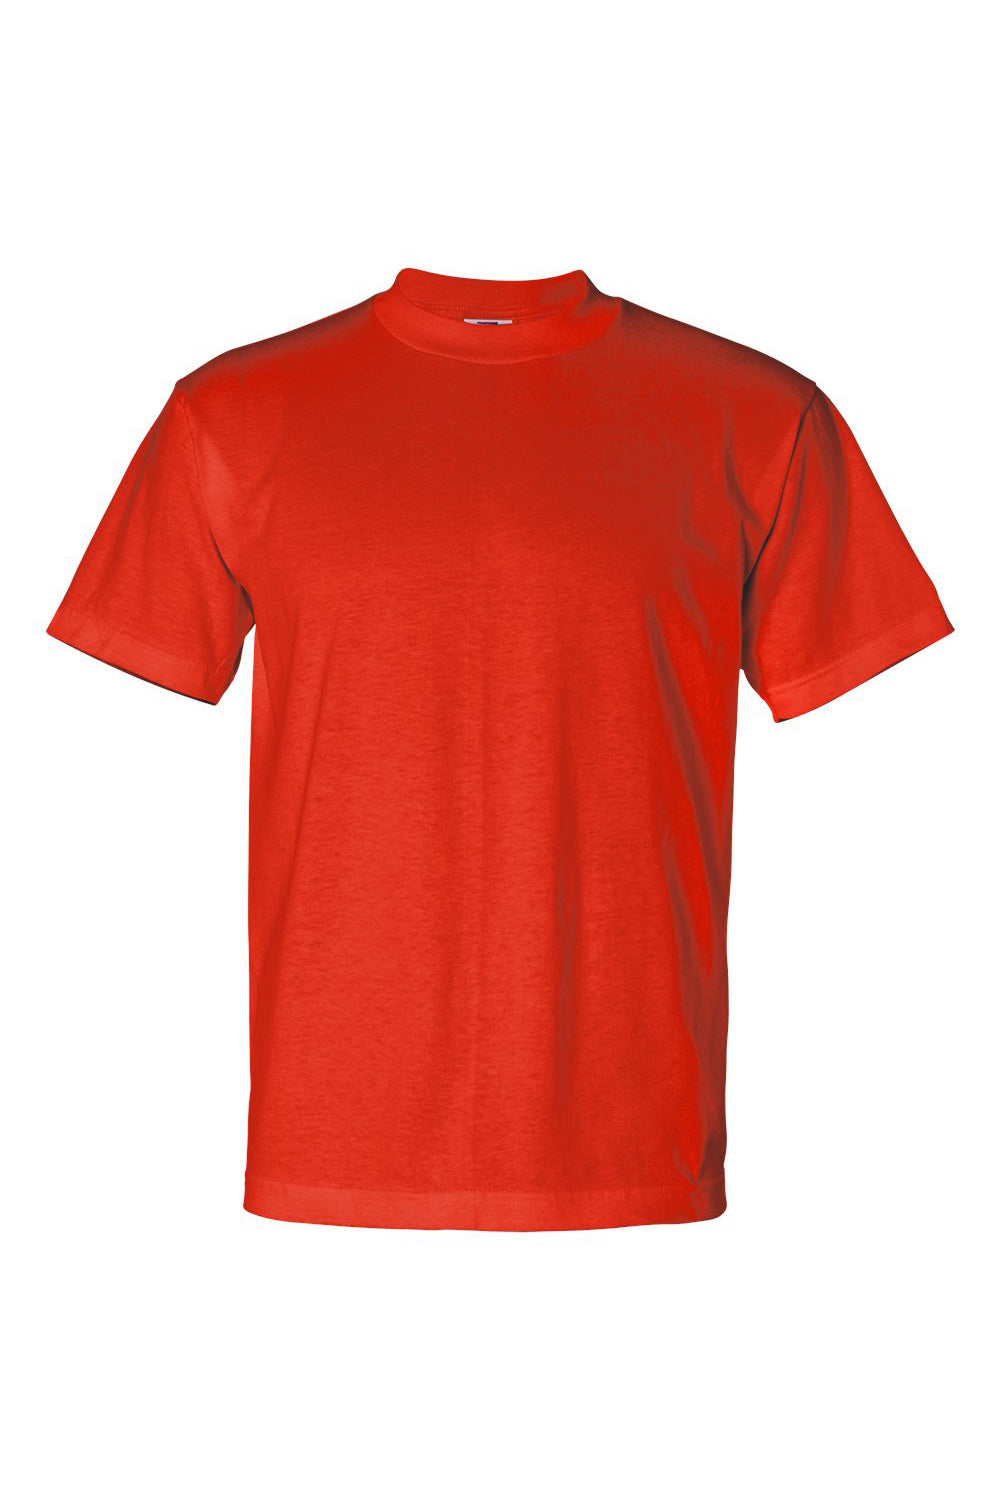 Bayside 1701 Mens USA Made Short Sleeve Crewneck T-Shirt Safety Orange Flat Front